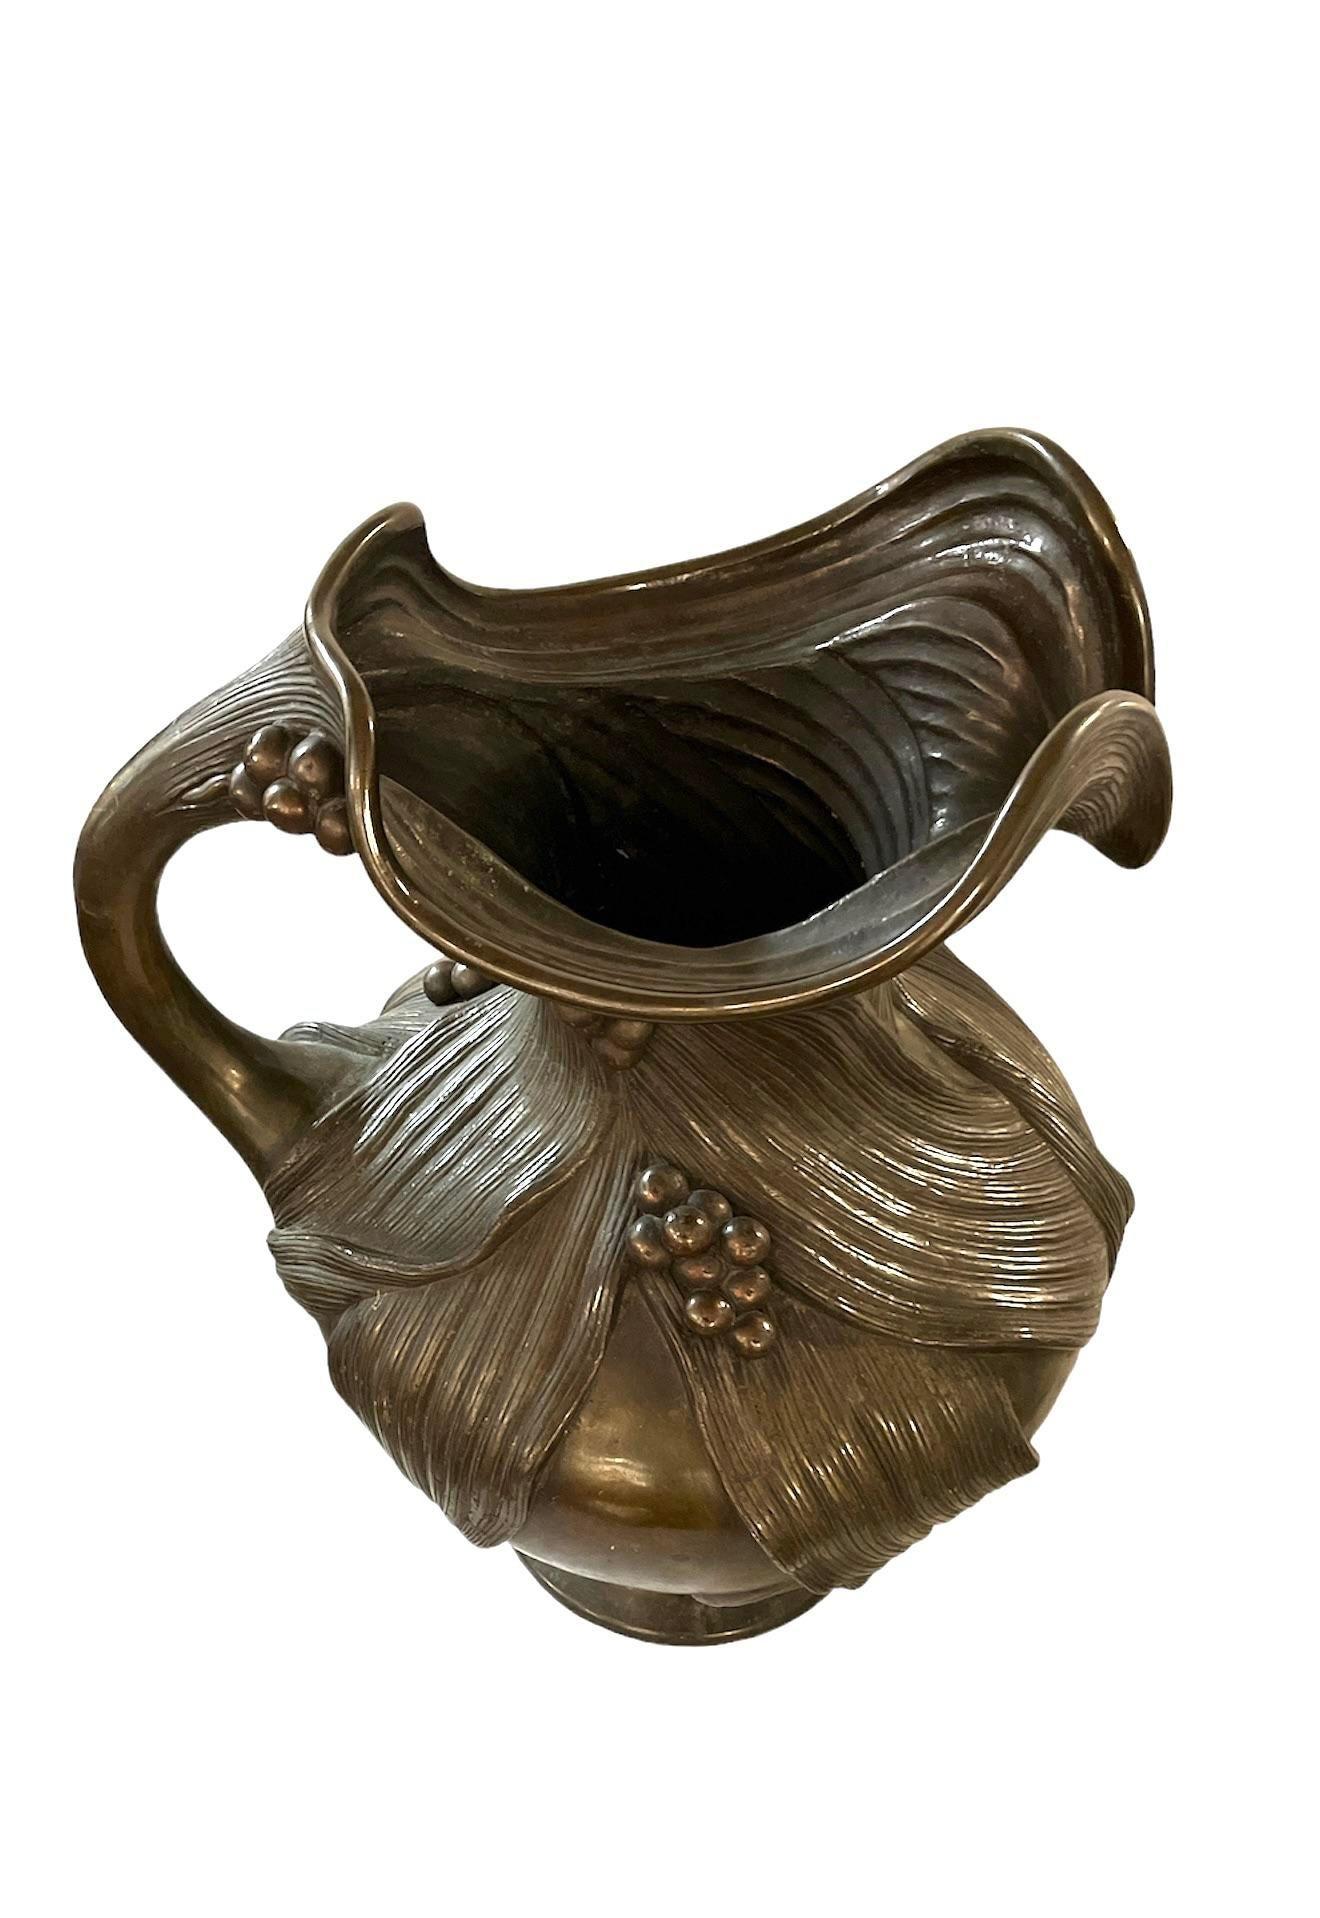 Antique bronze large planter vase with detailed grapes

Measures: 30